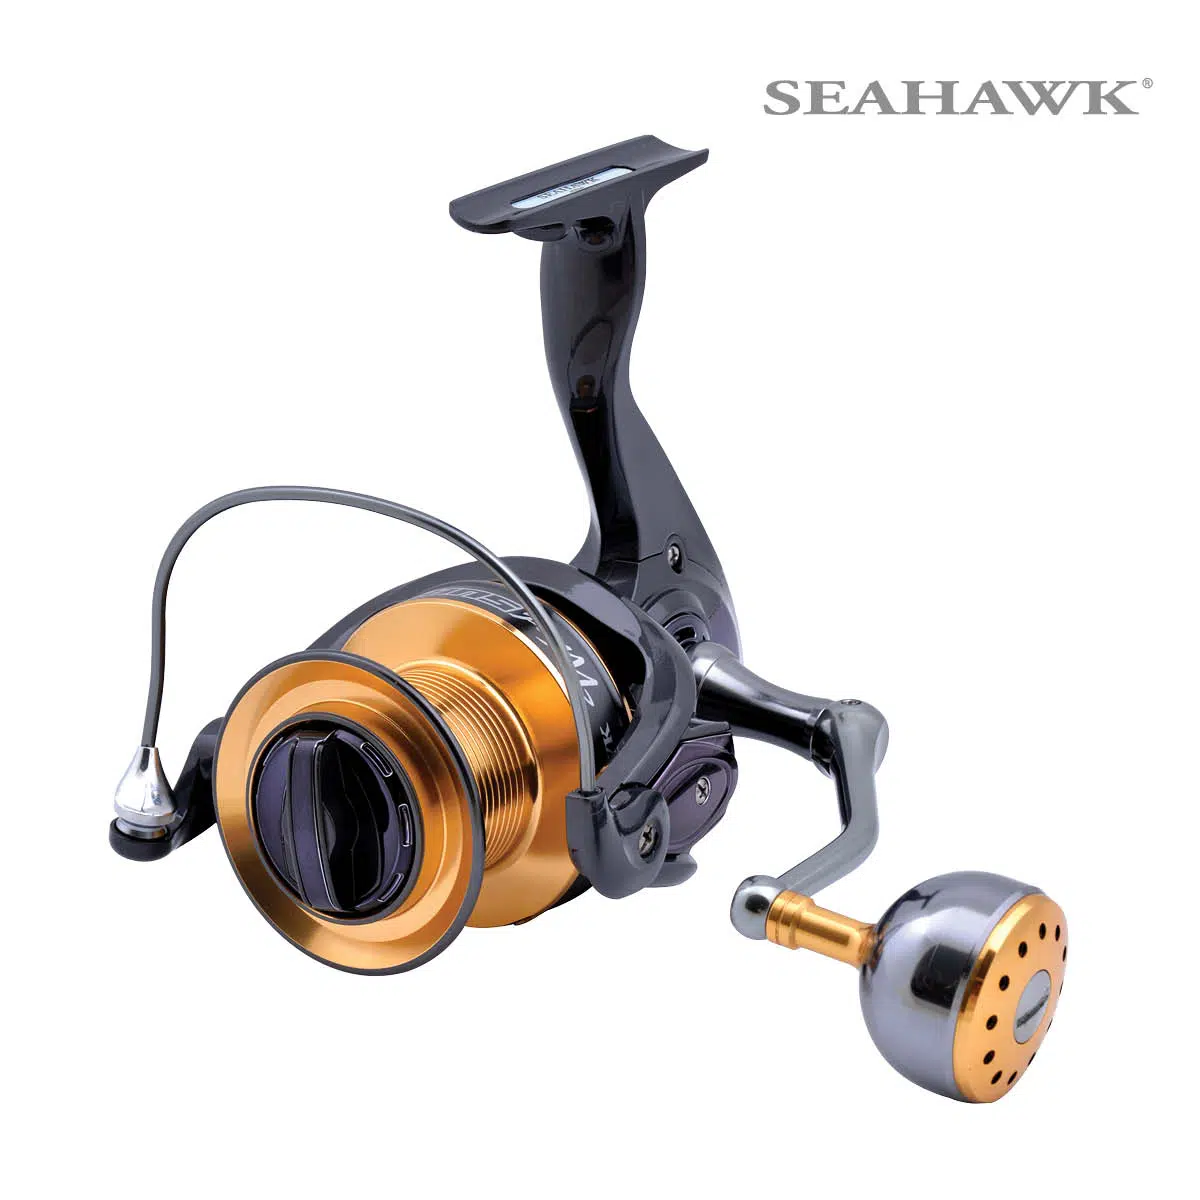 https://seahawkfishing.com/wp-content/uploads/2021/07/Seahawk-Wind-Surf-01.jpg.webp